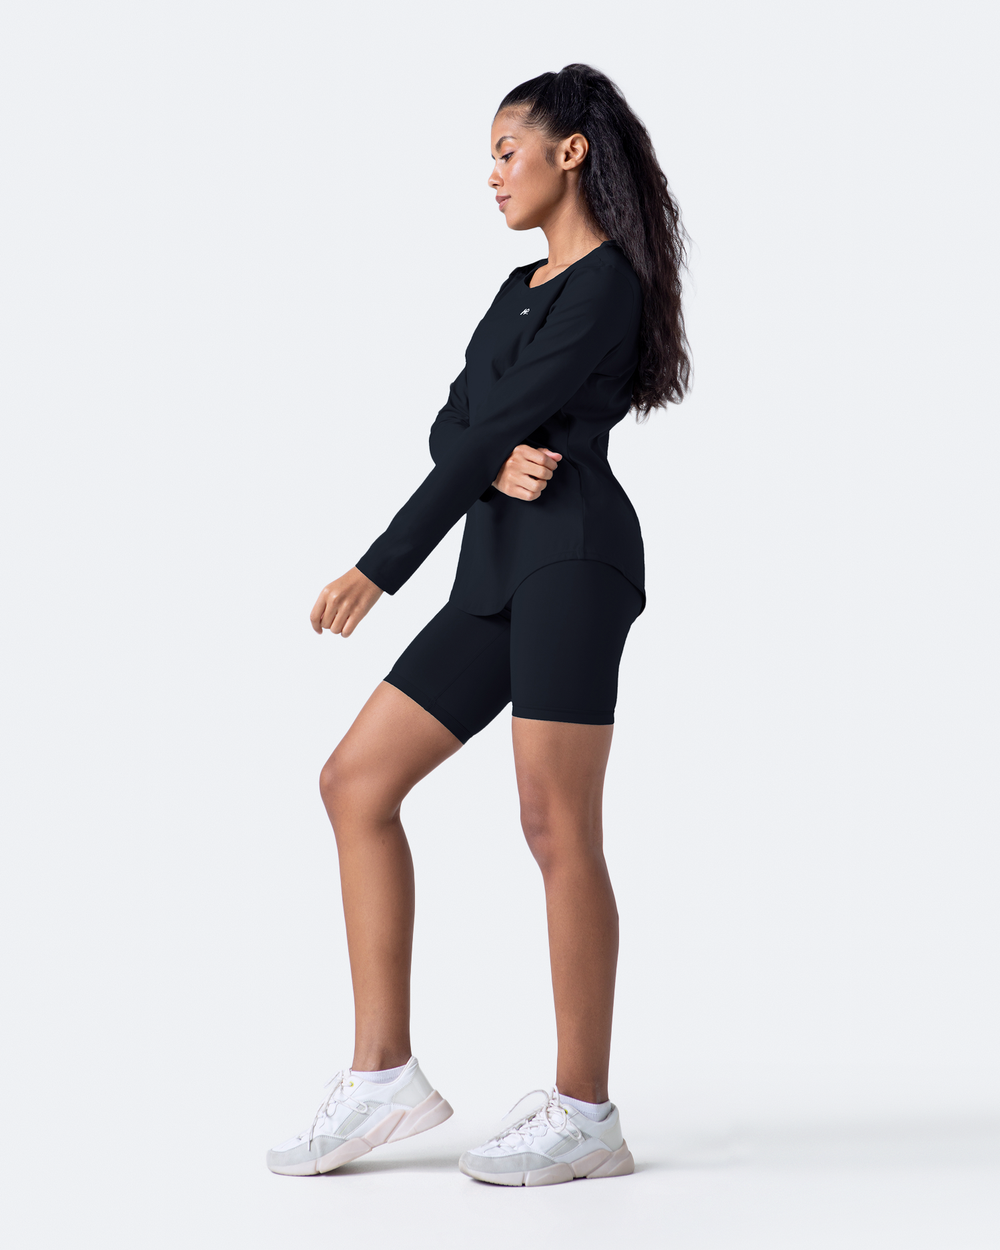 BetterMe Jet Black Long Sleeve and Bike Shorts Sports Set for women –  BetterMe Store